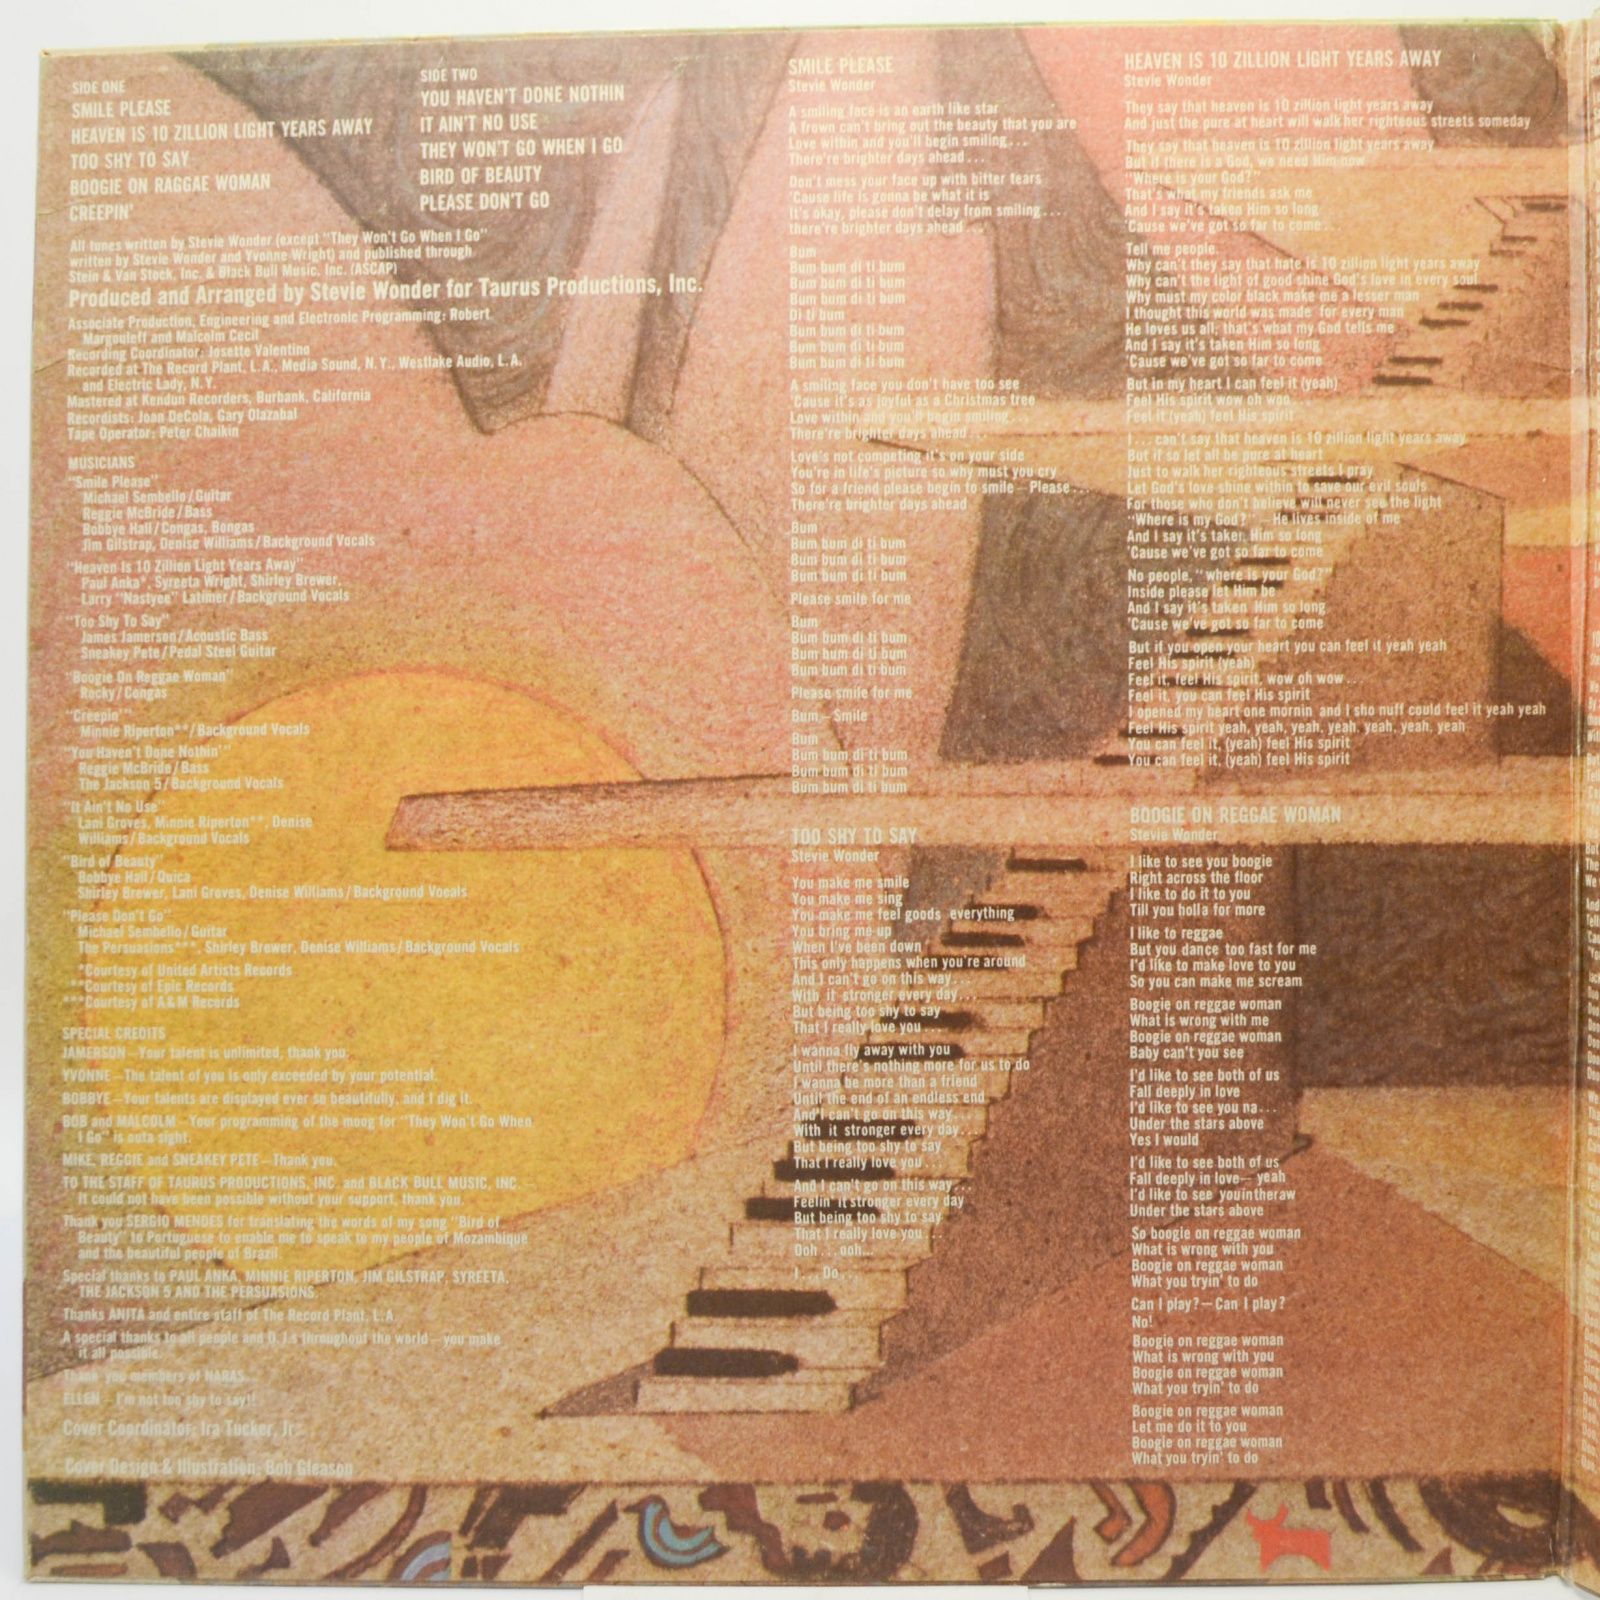 Stevie Wonder — Fulfillingness' First Finale, 1974